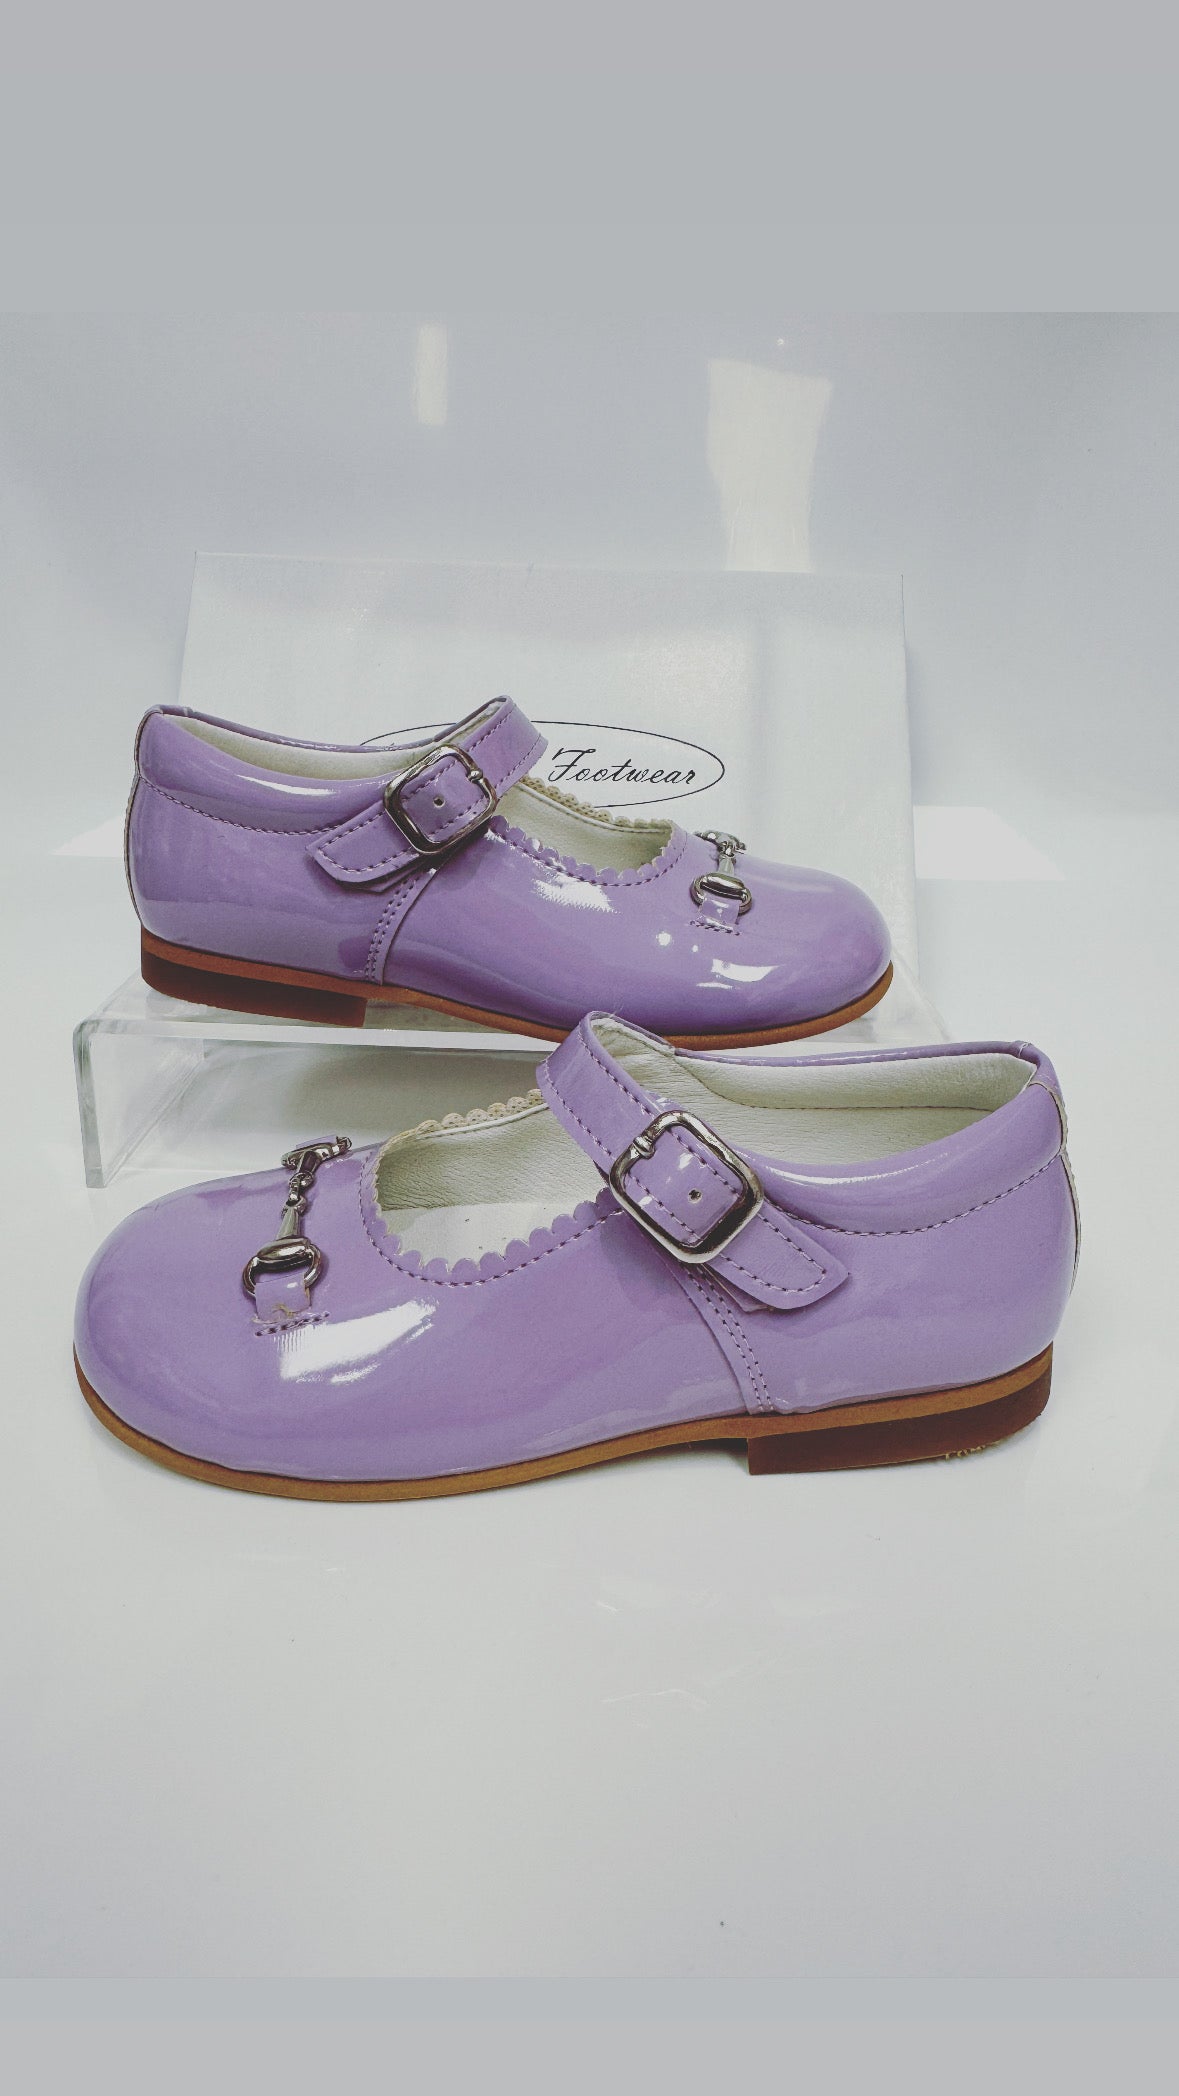 6270-2 Lilac Shoe with Horsebit Buckle